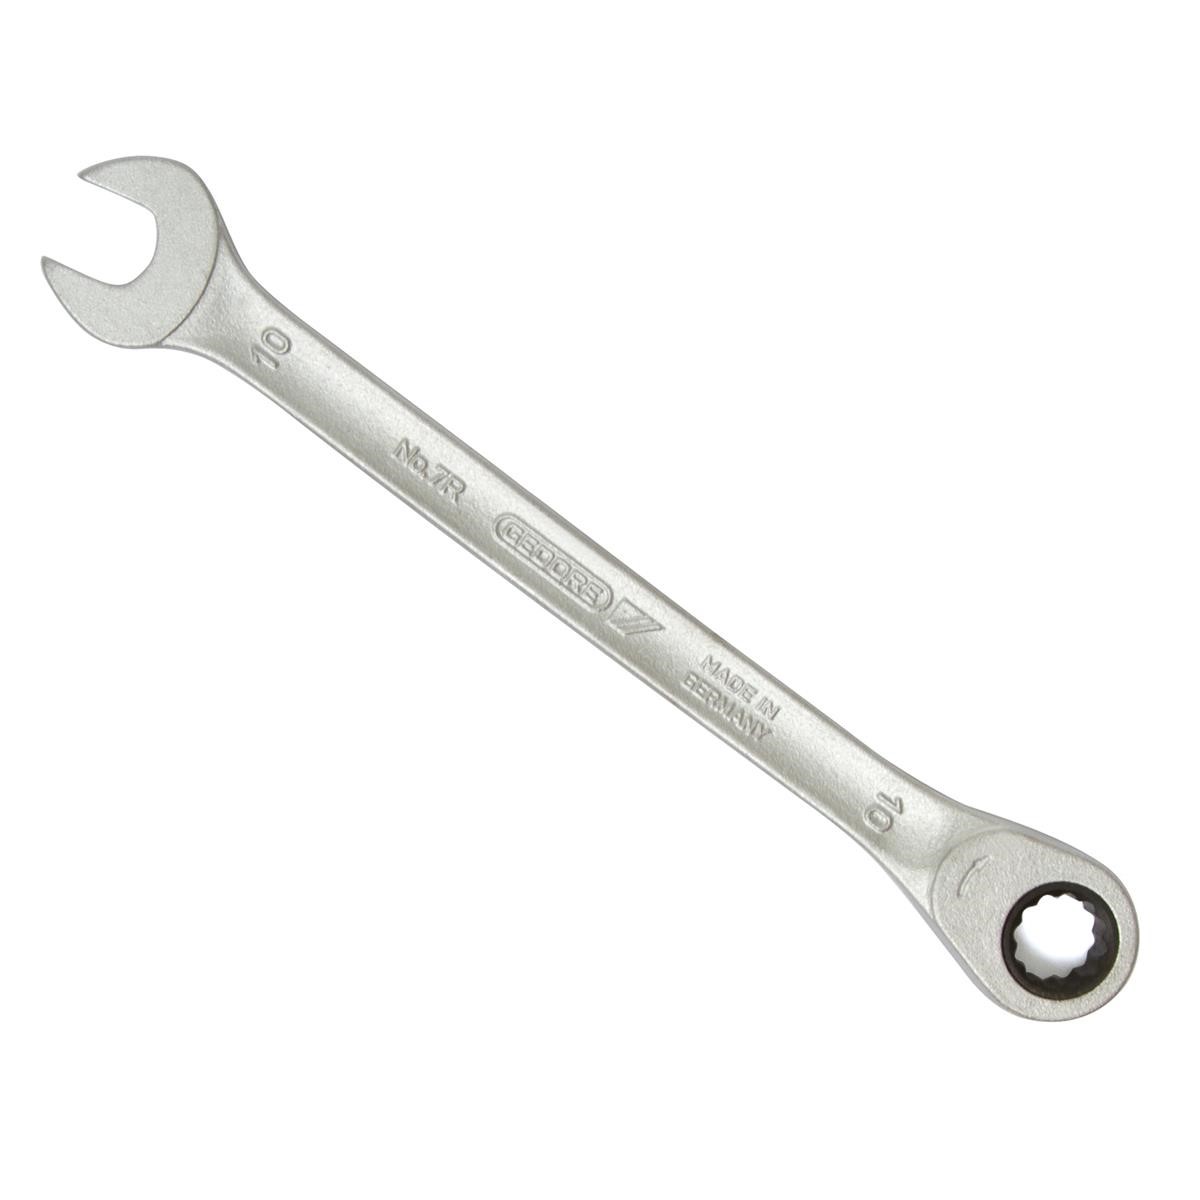 Zanbaline Combination Wrench  Ratchet, 10 mm